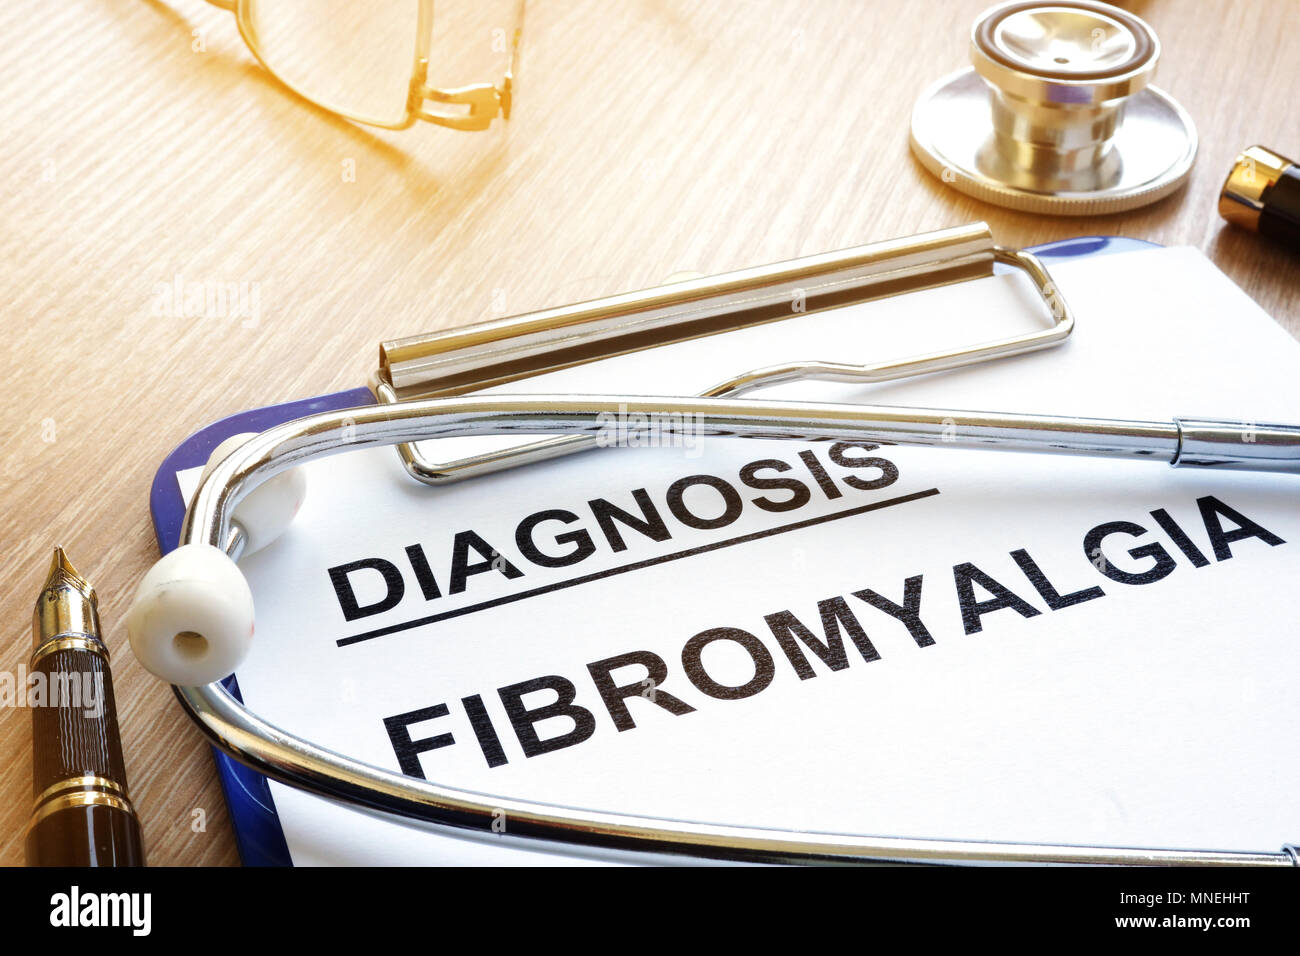 Clipboard with diagnosis fibromyalgia and pen. Stock Photo